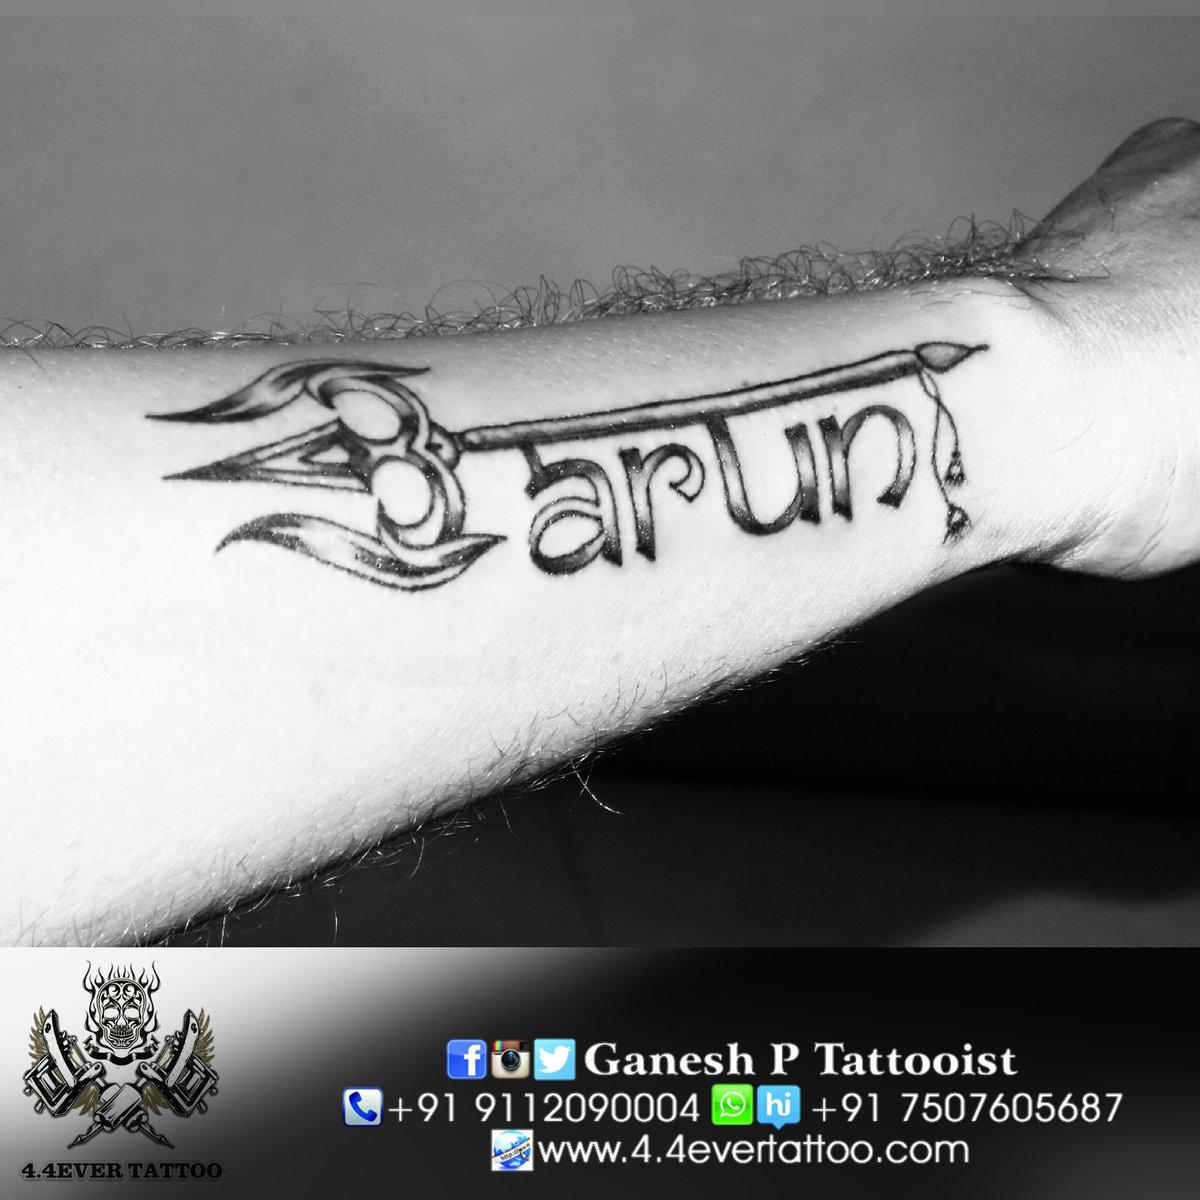 Masculine Conservative Tattoo Tattoo Design for a Company by Arun 25   Design 26511521